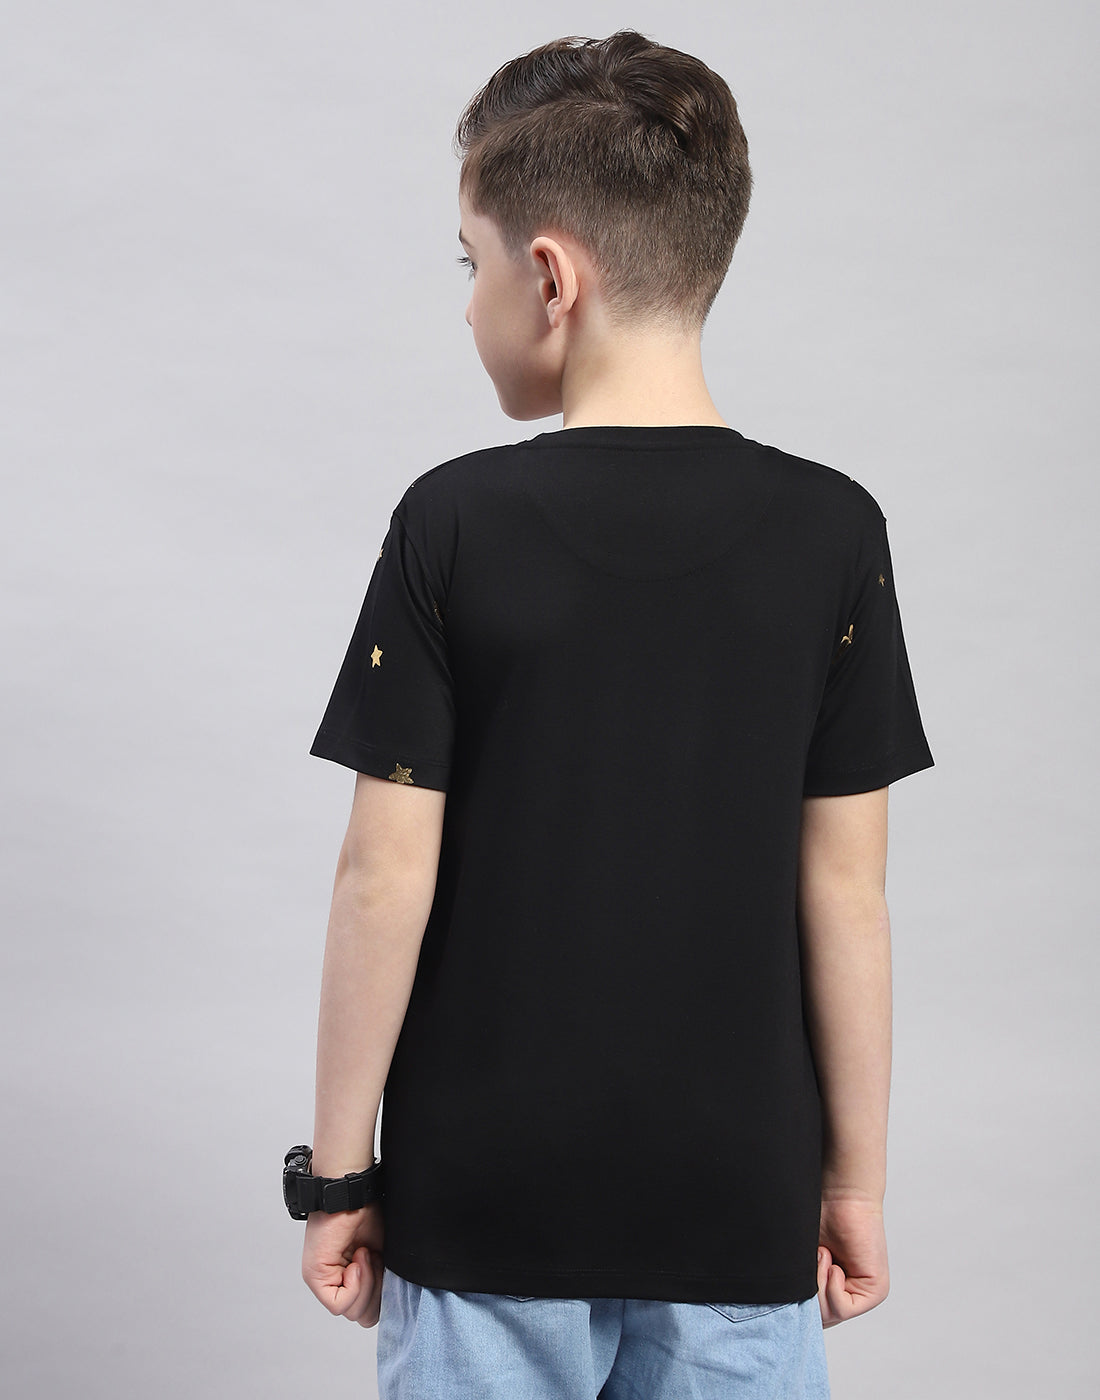 Boys Black Printed Round Neck Half Sleeve T-Shirt